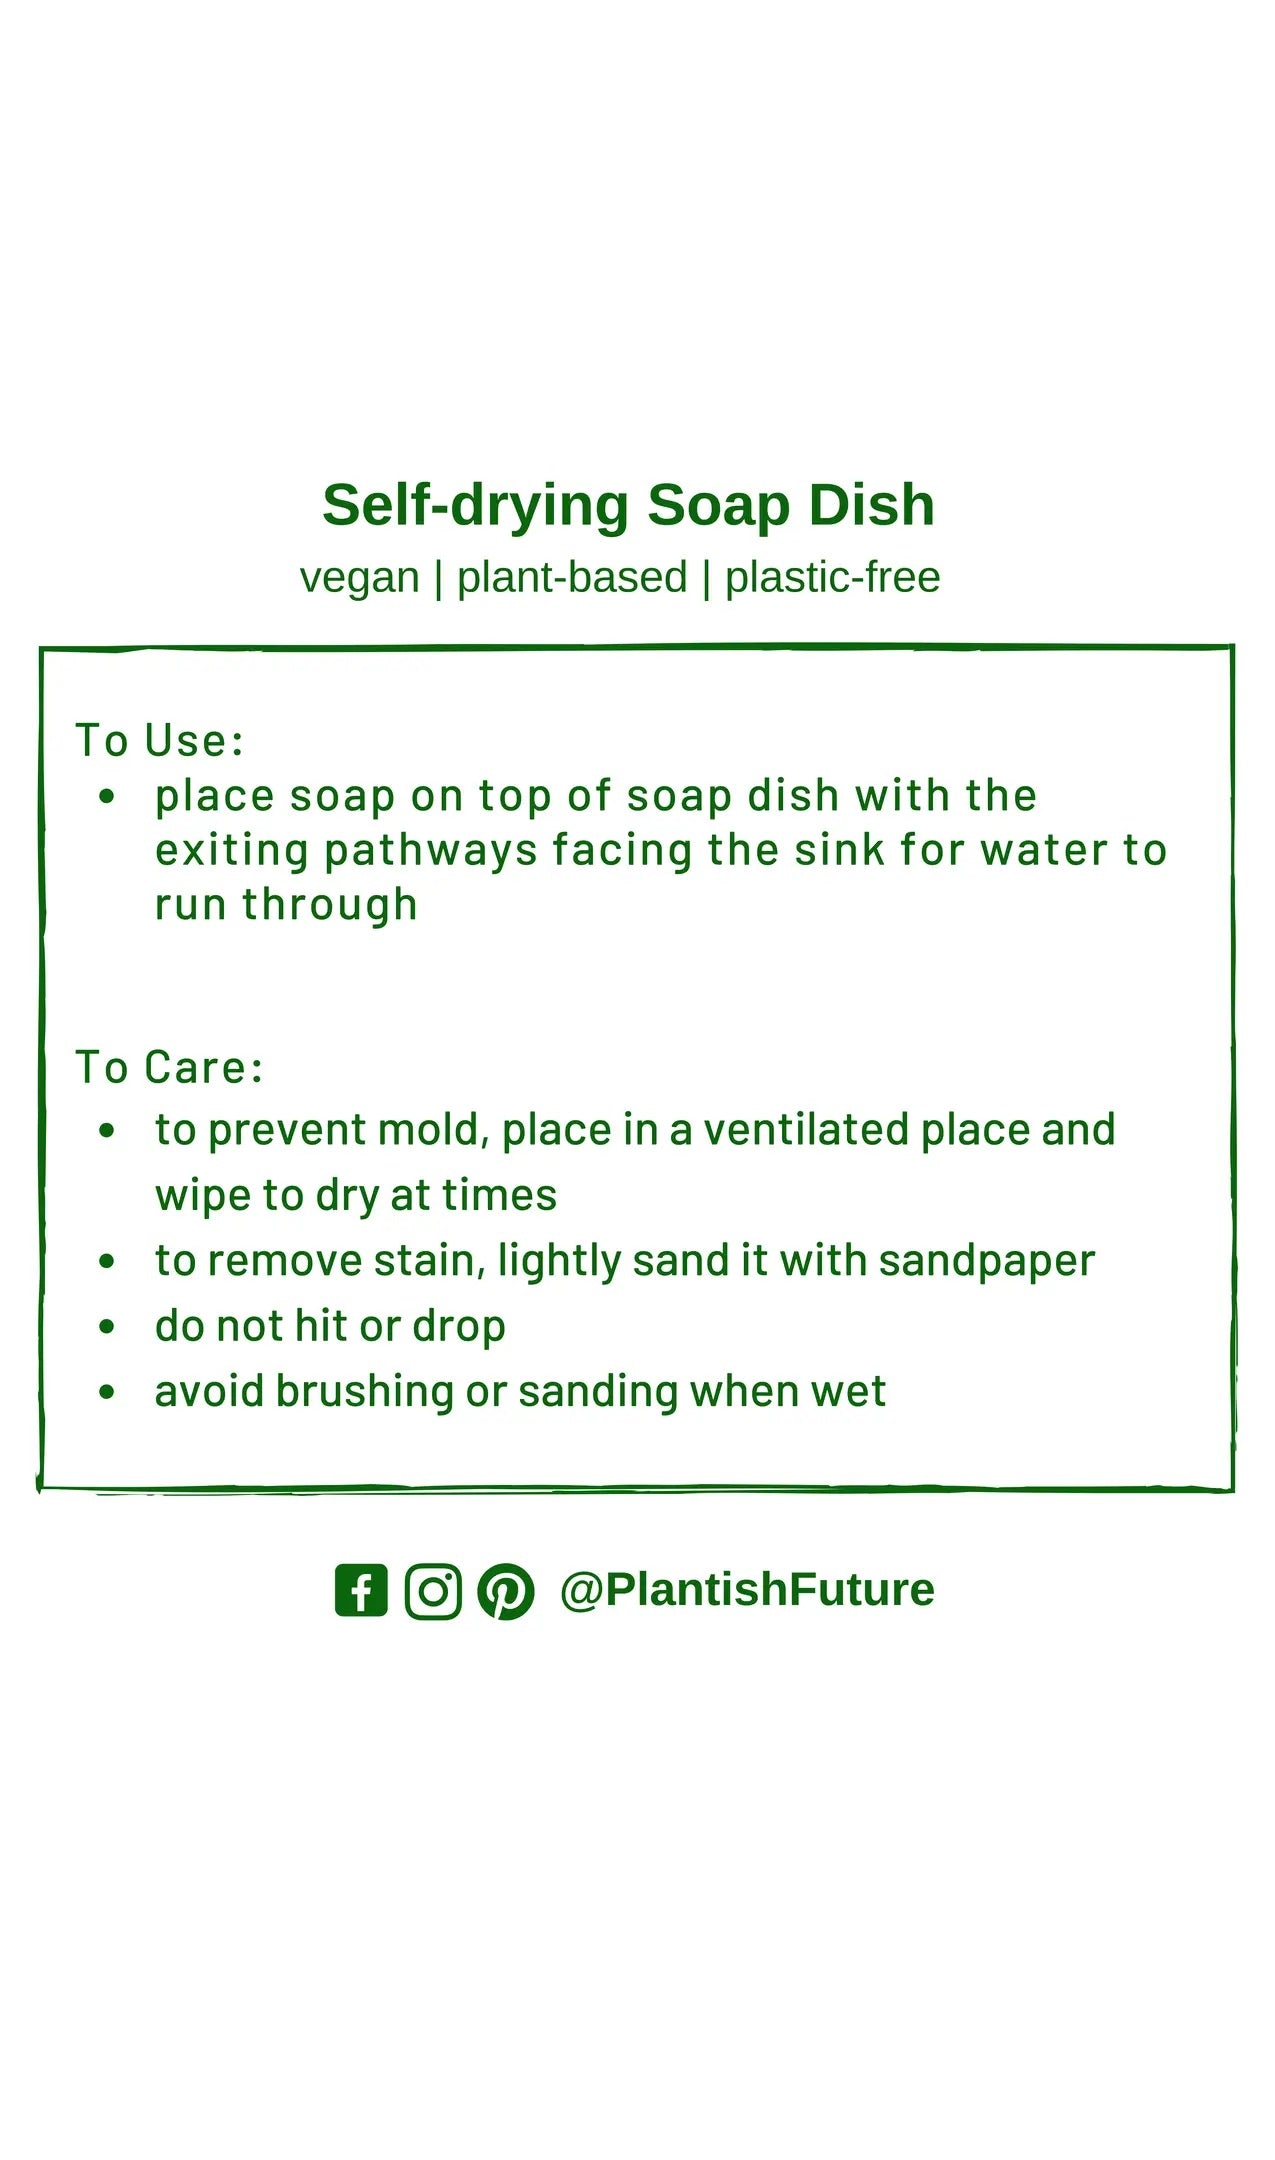 Self-drying Soap Dish